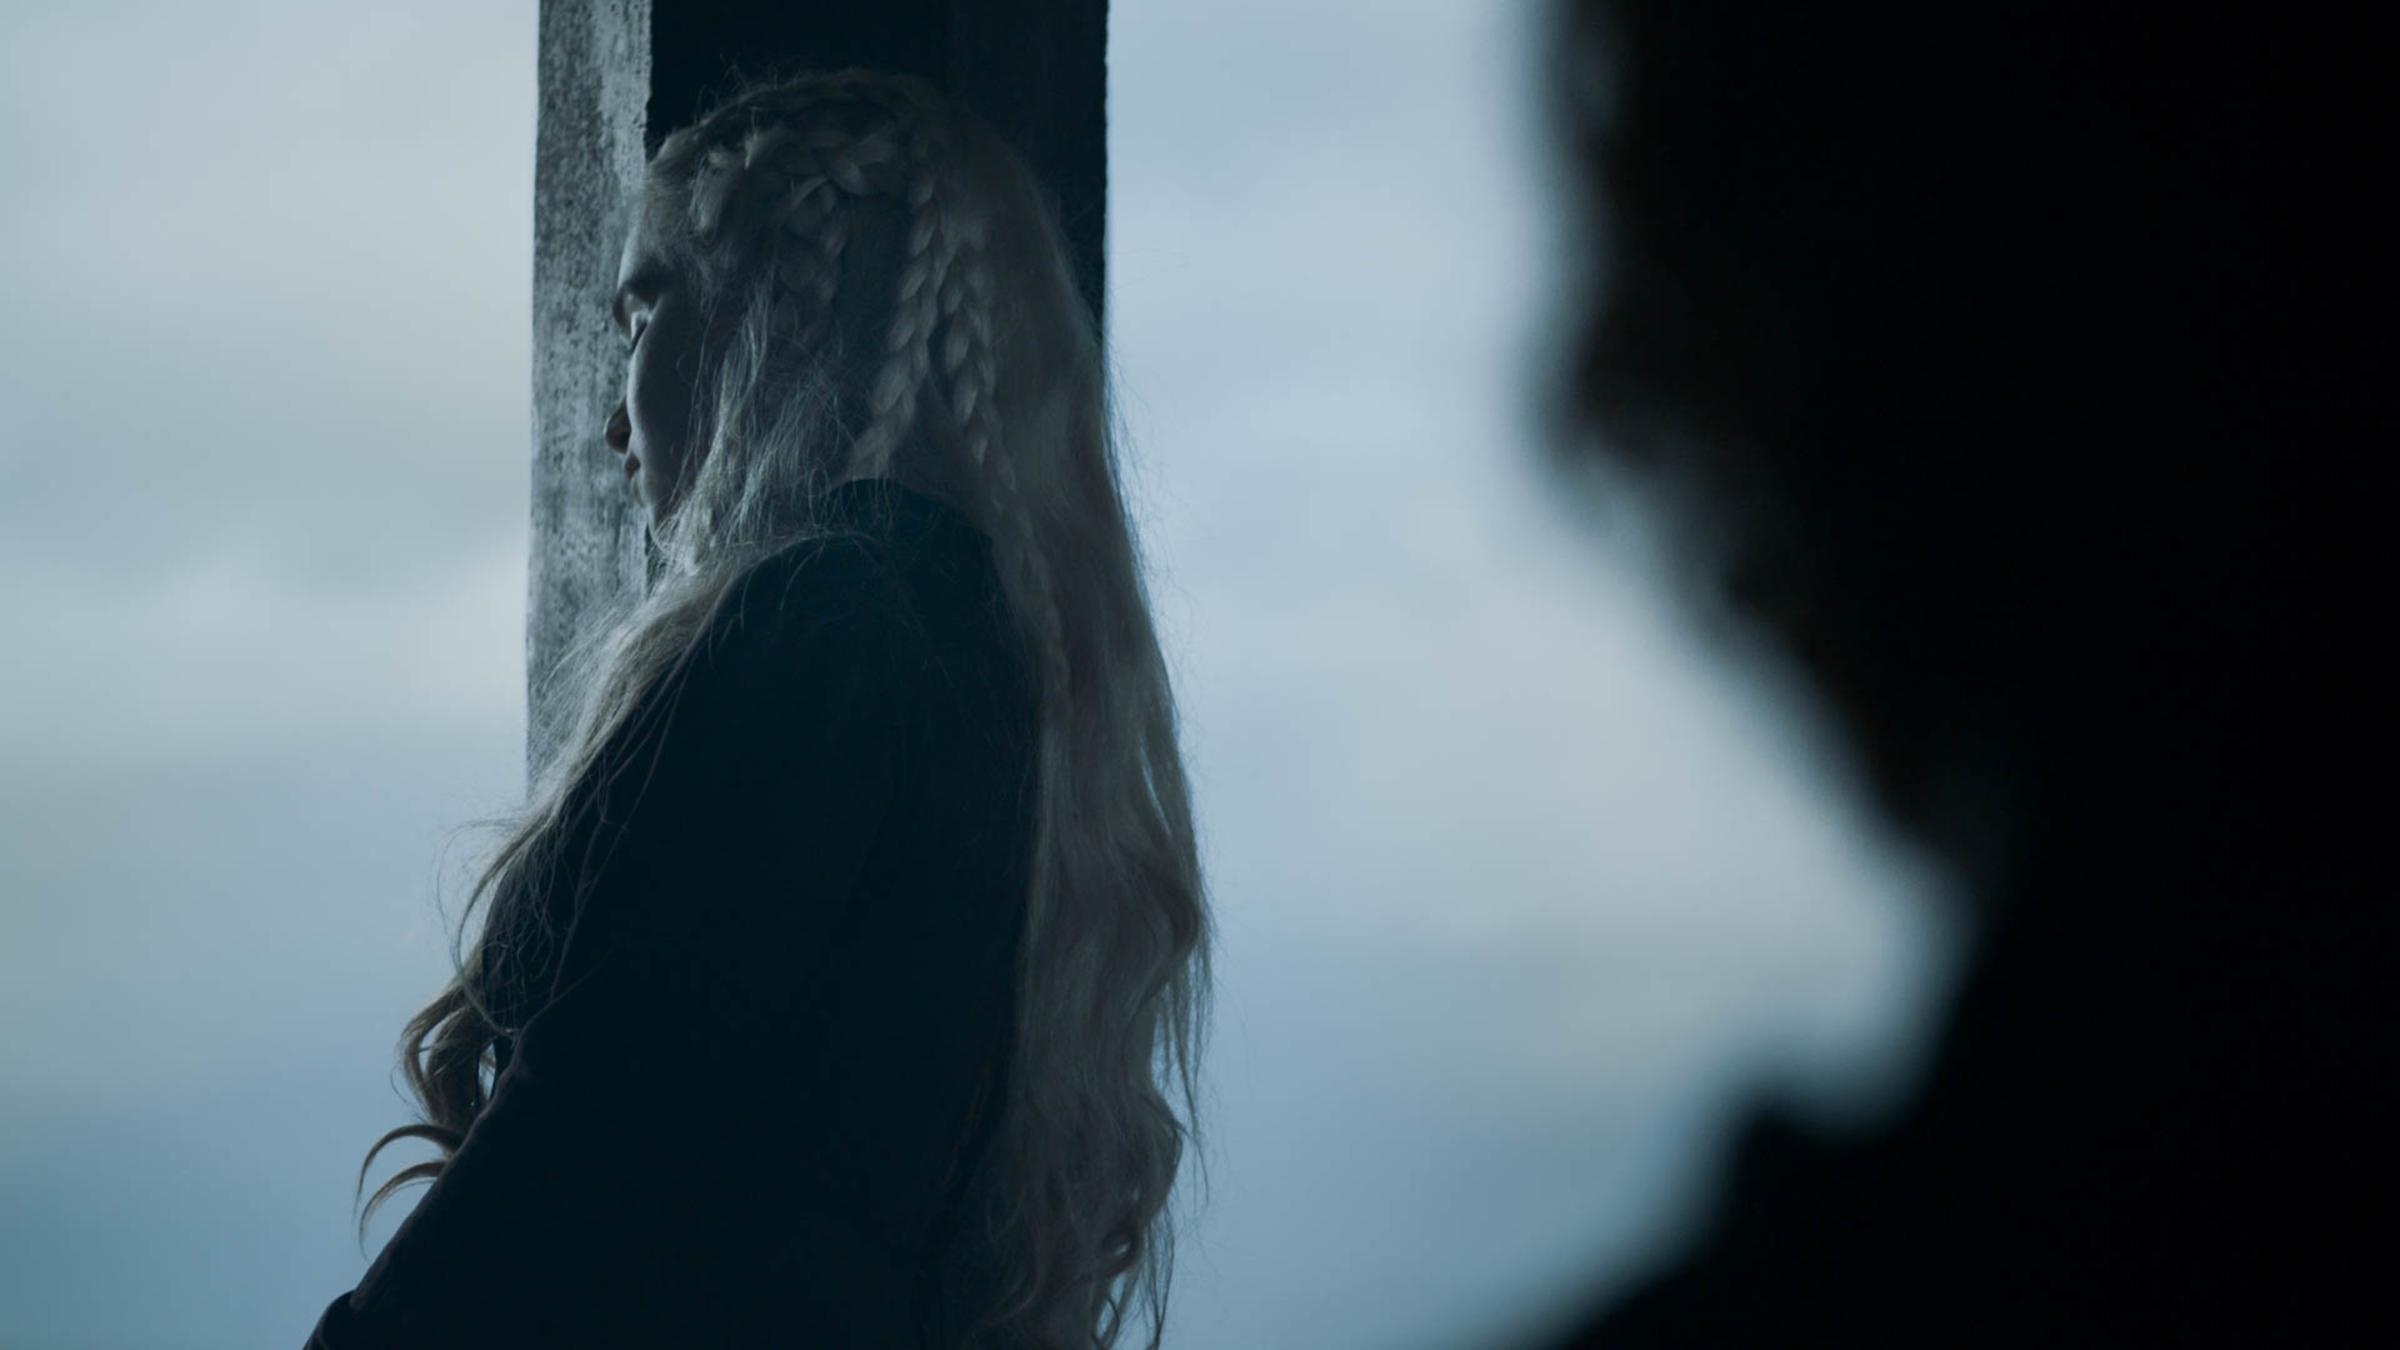 Emilia Clarke as Daenerys Targaryen.